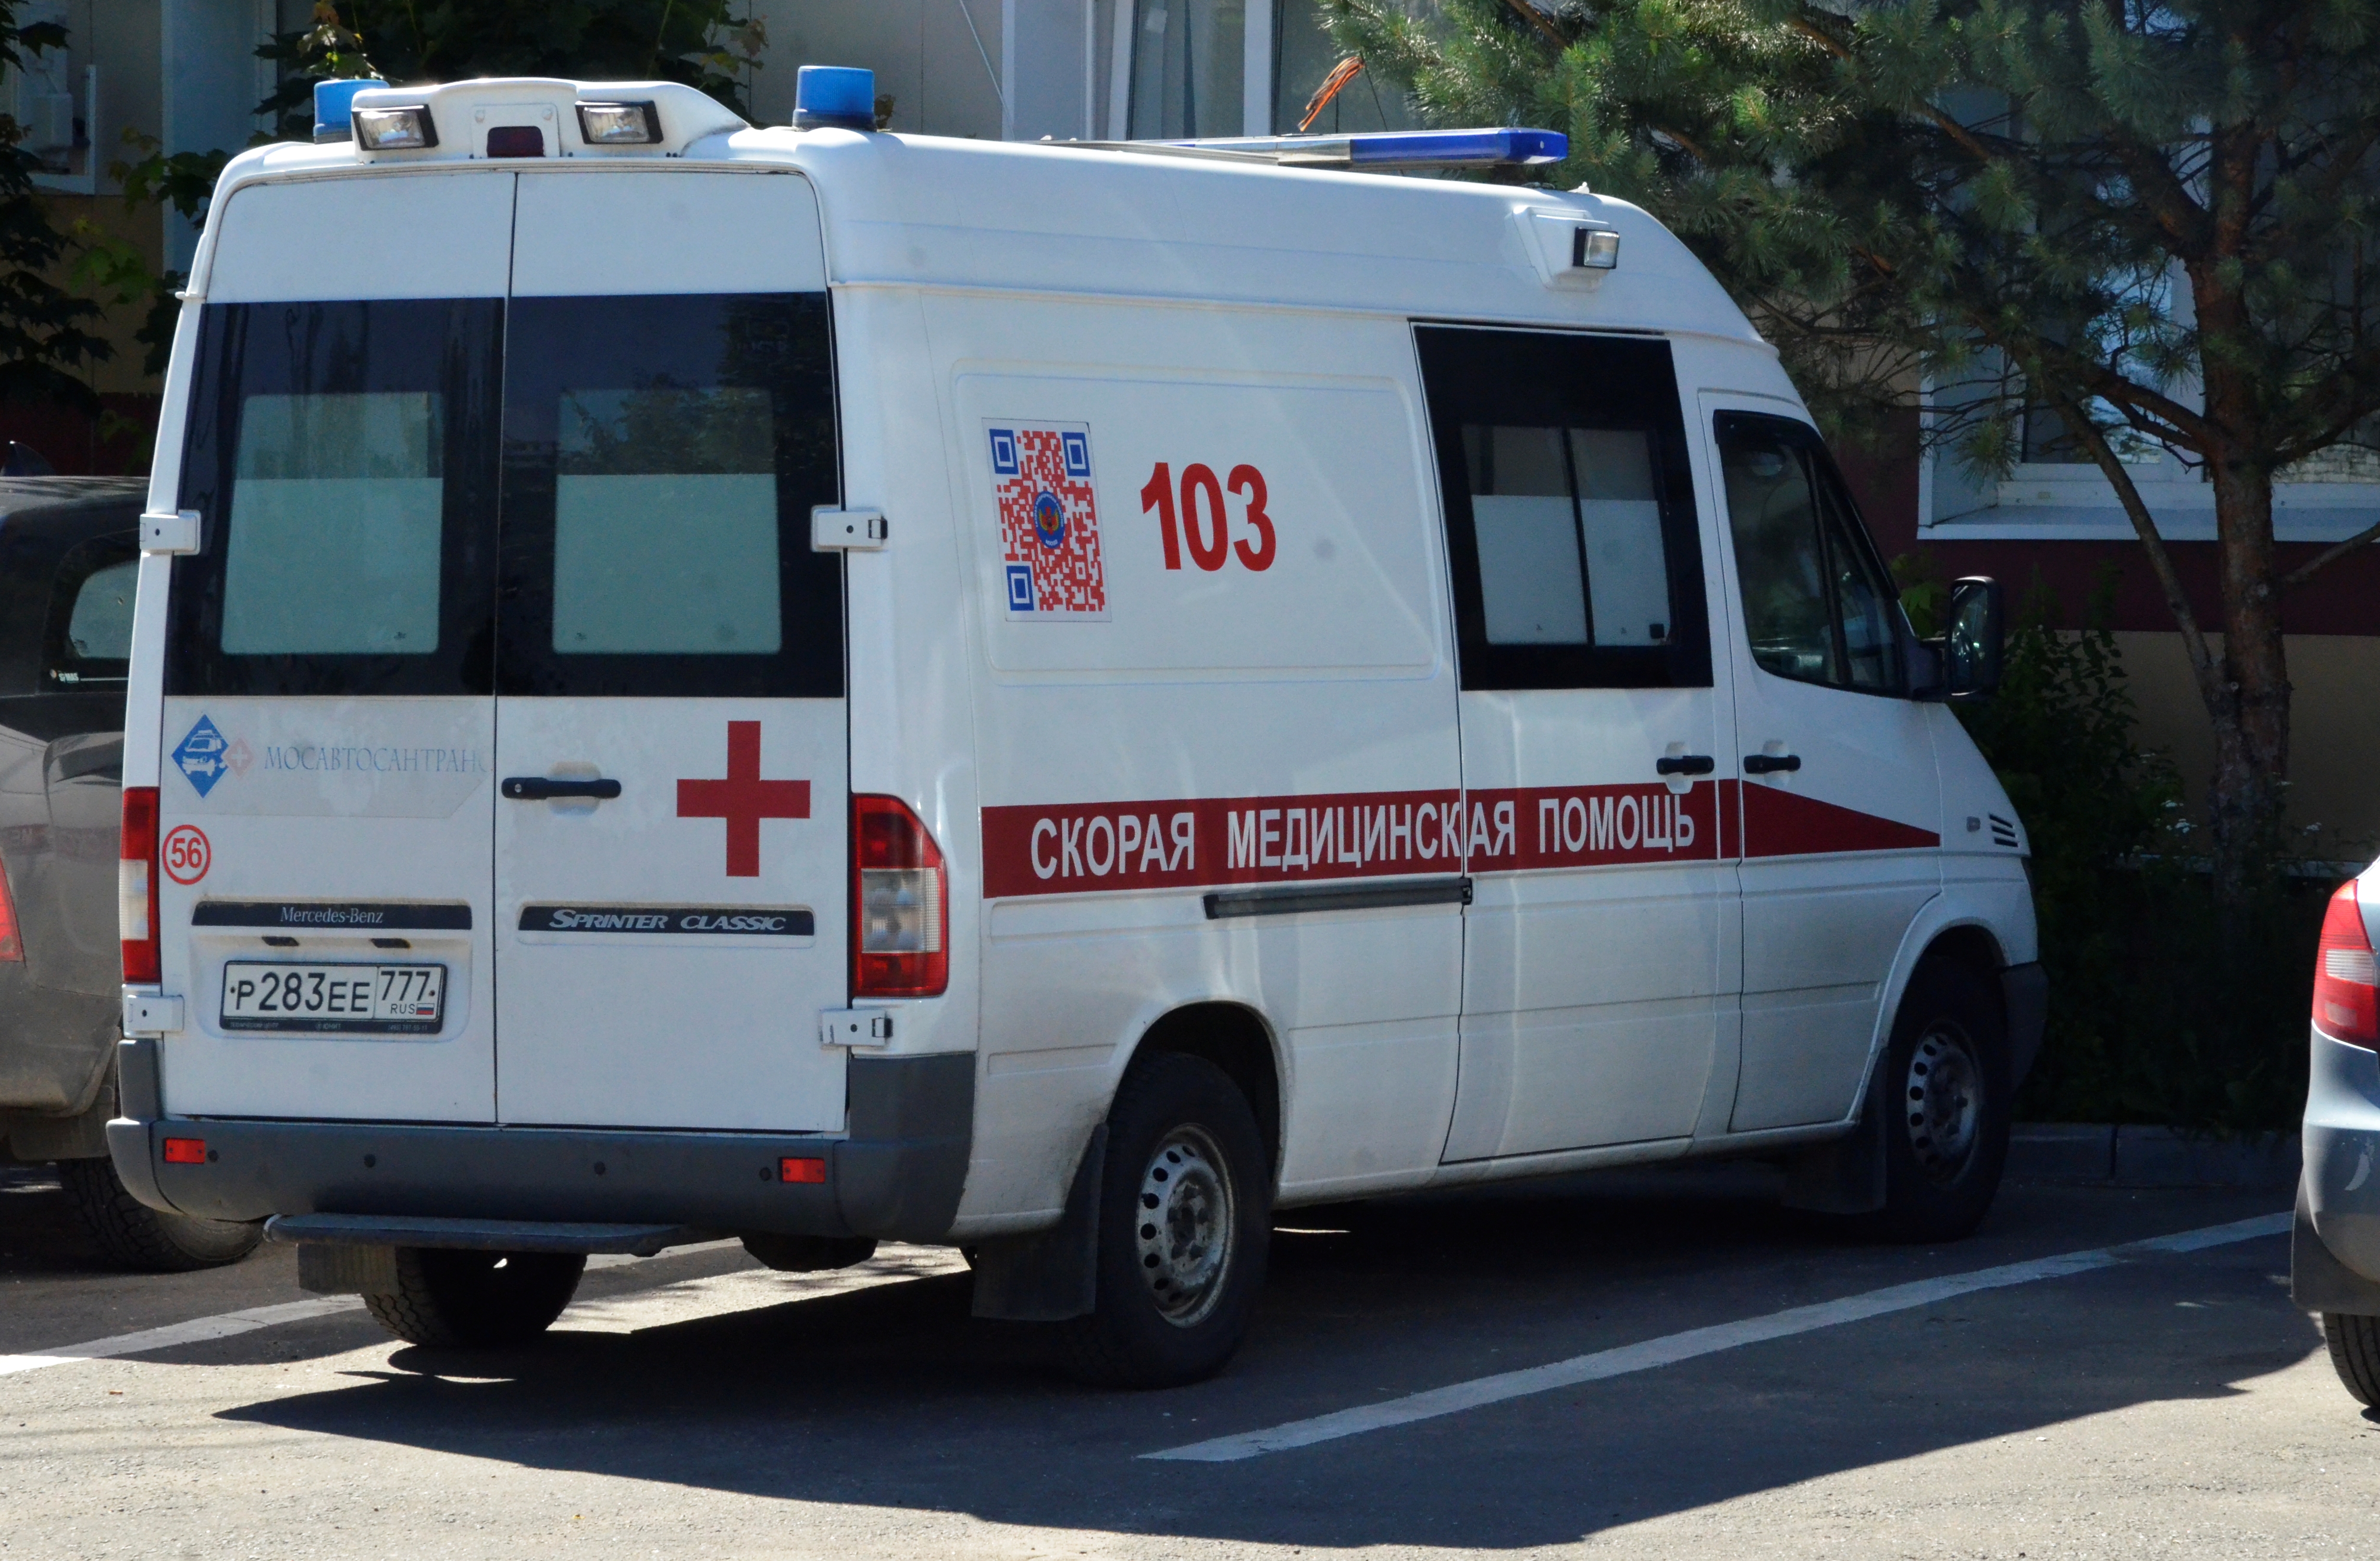 СМИ: Два человека пострадали при столкновении автобуса и грузовика в ТиНАО